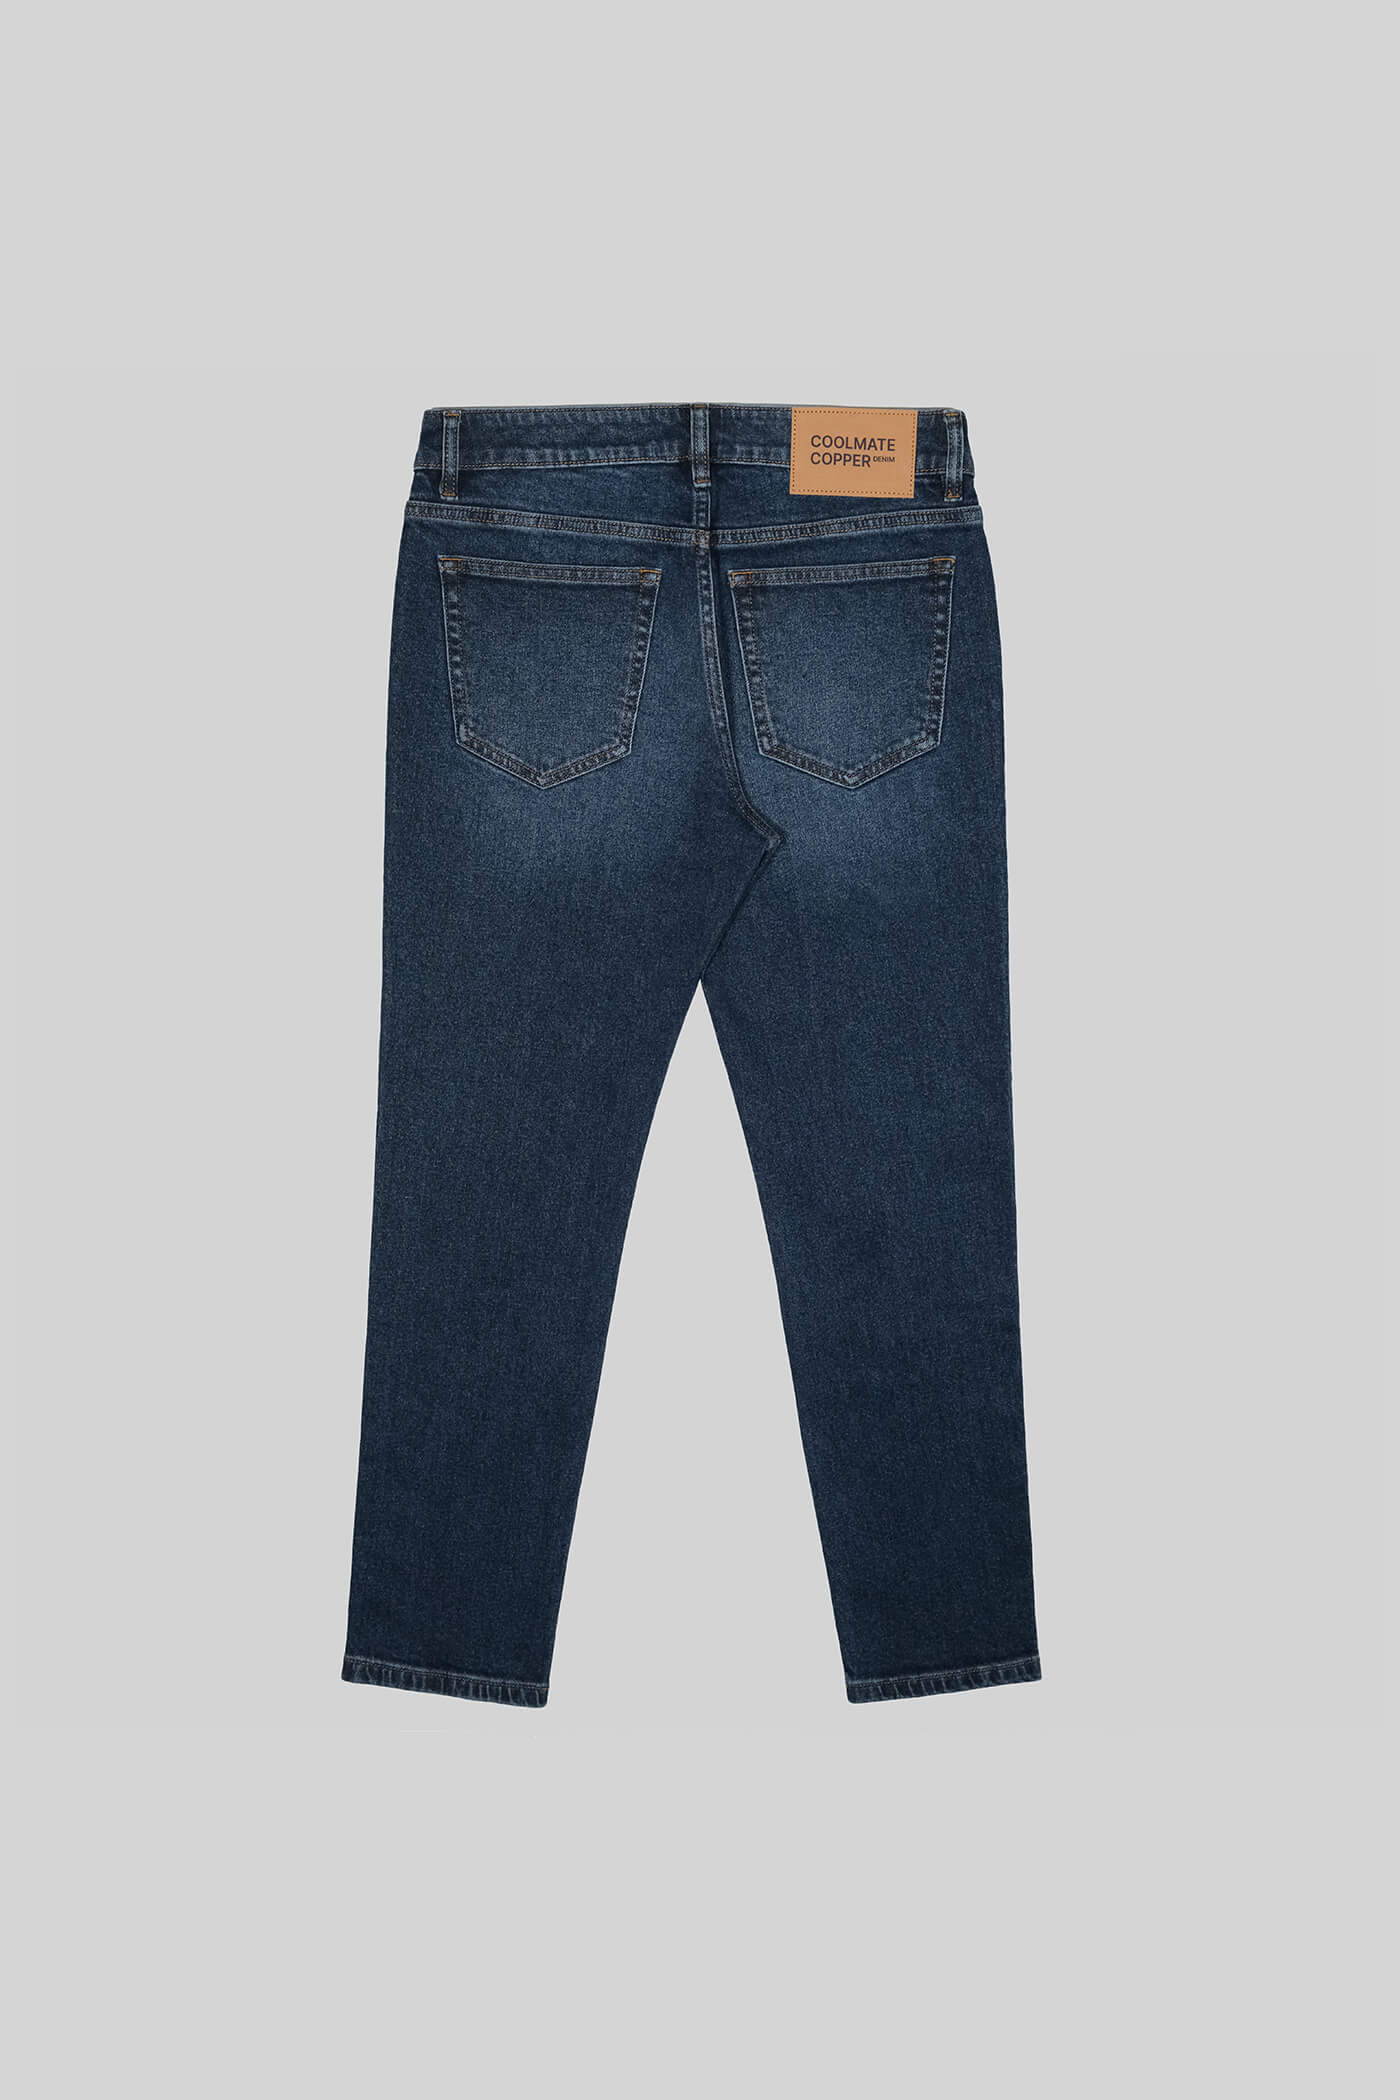 SĂN DEAL - Quần Jeans Nam Copper Denim Slim Fit  2